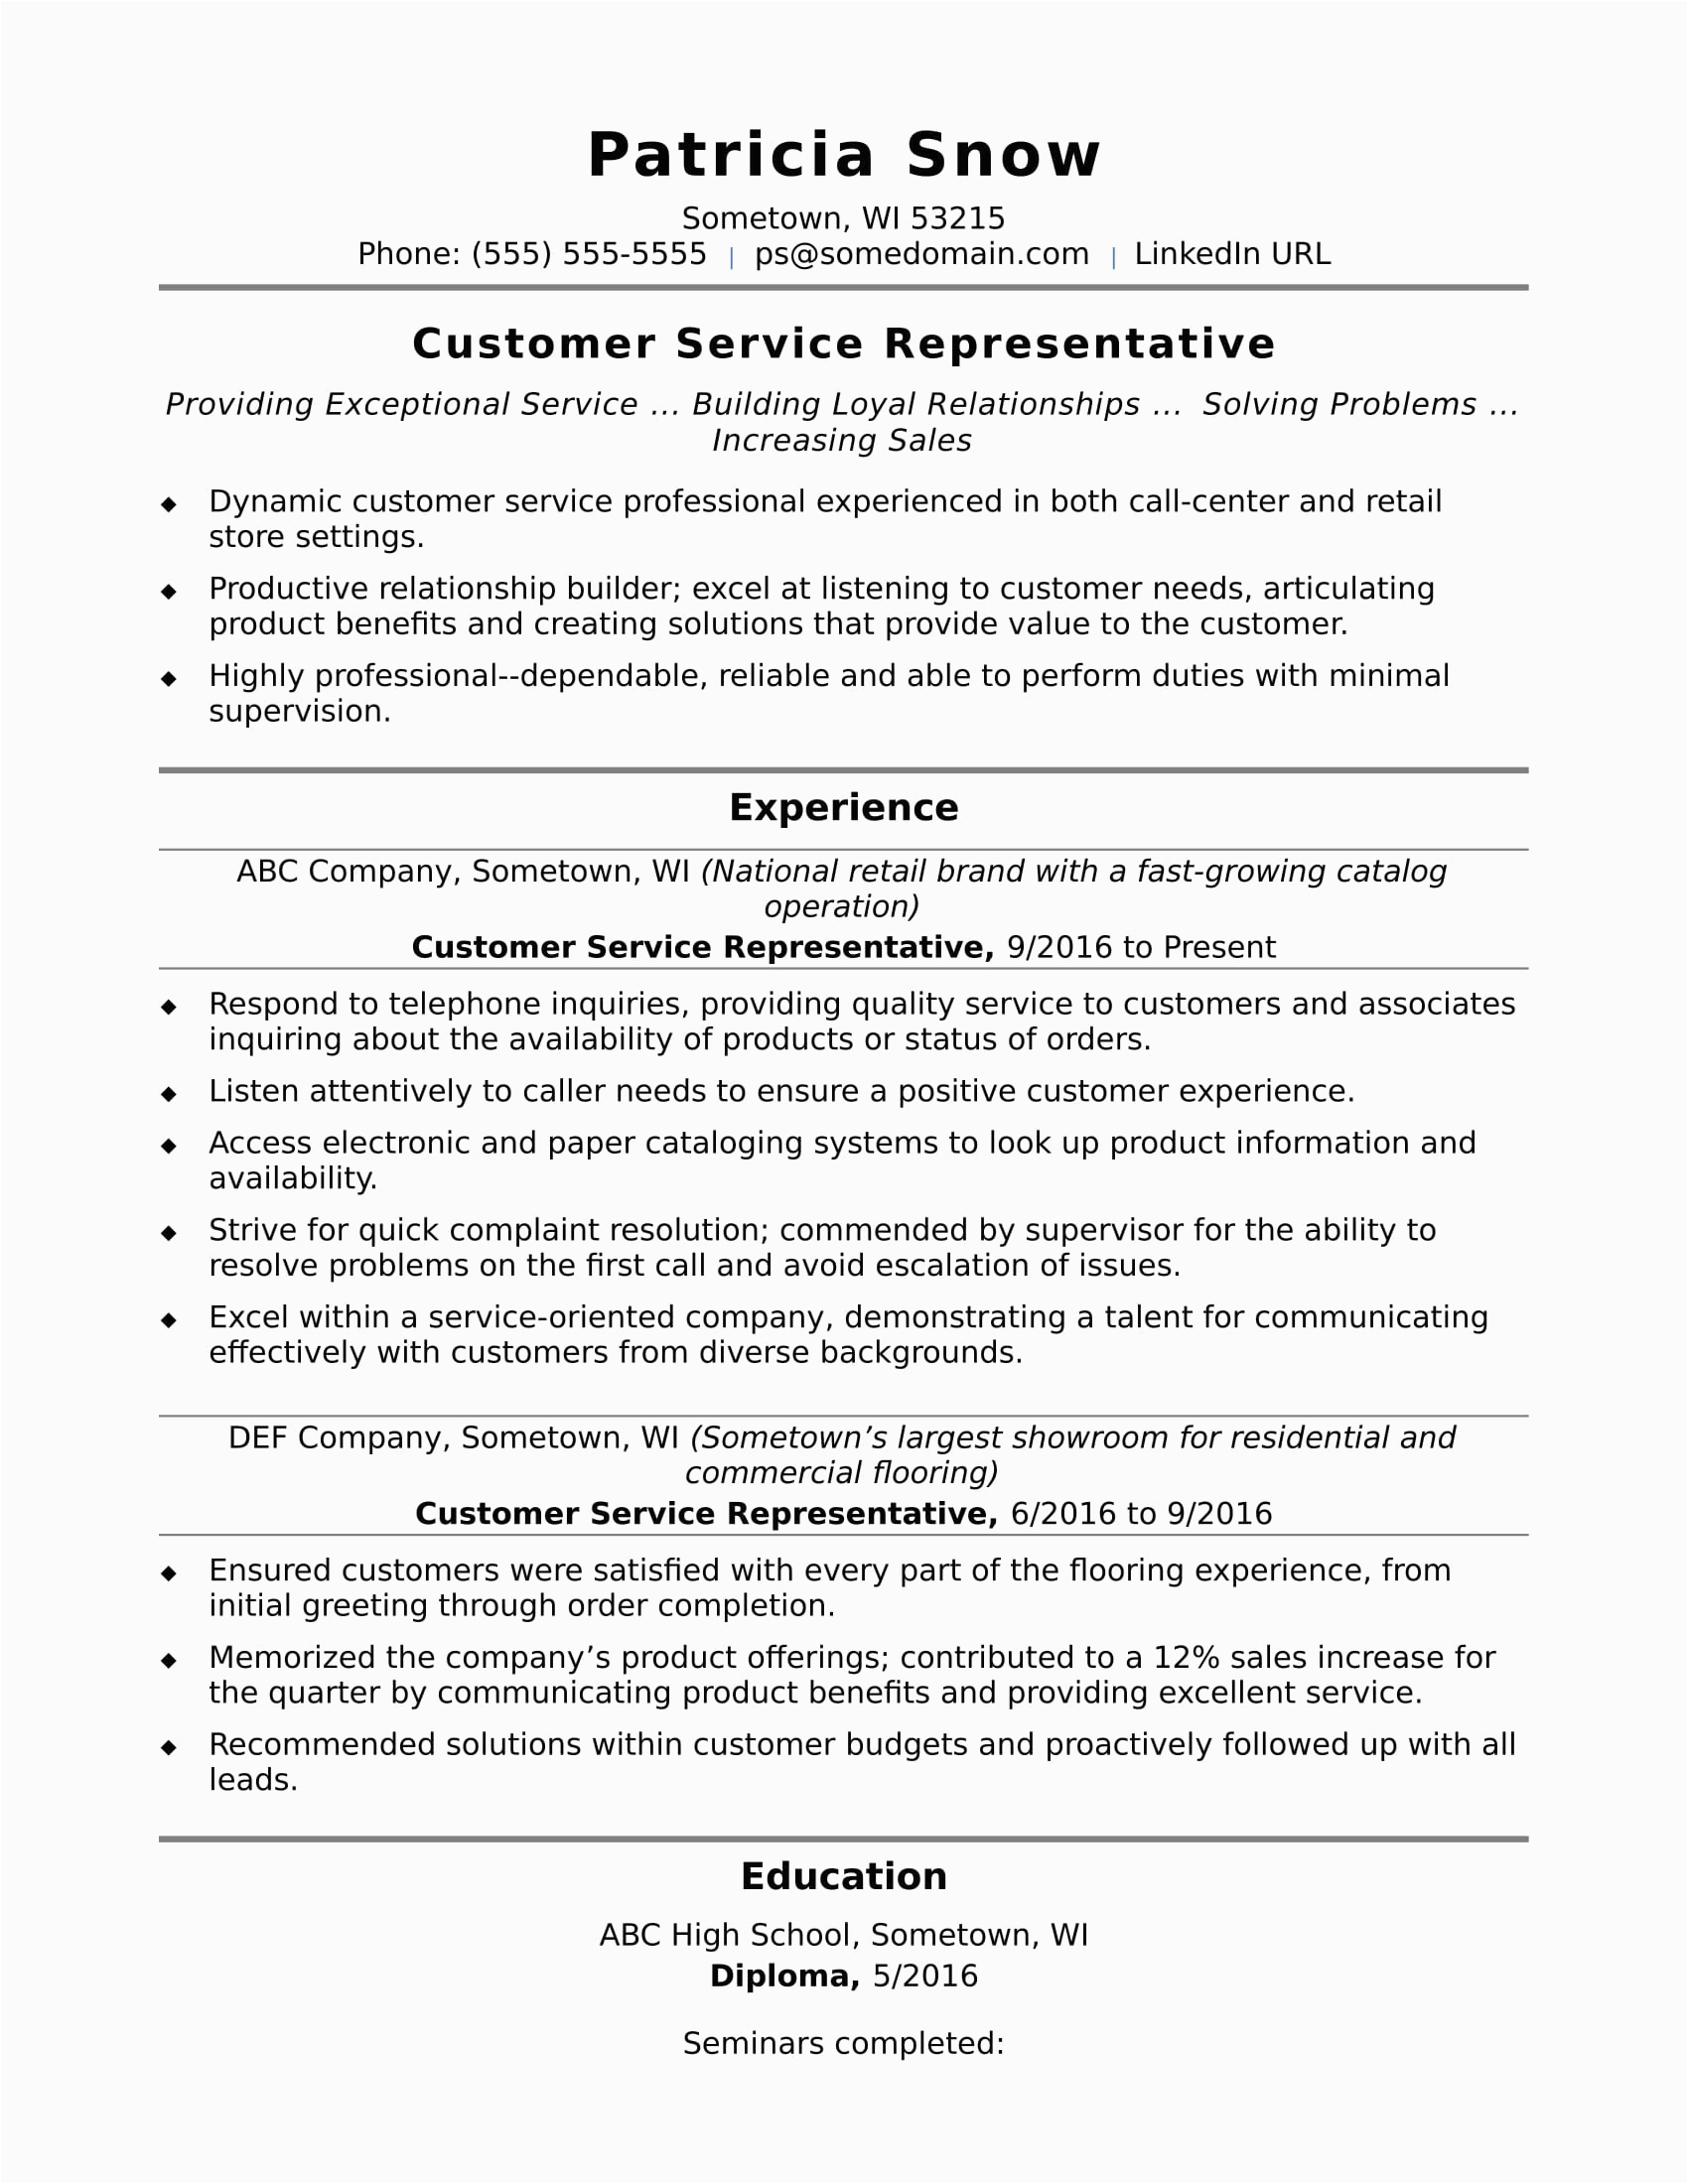 Customer Service Job Description Sample Resume Customer Service Representative Resume Sample